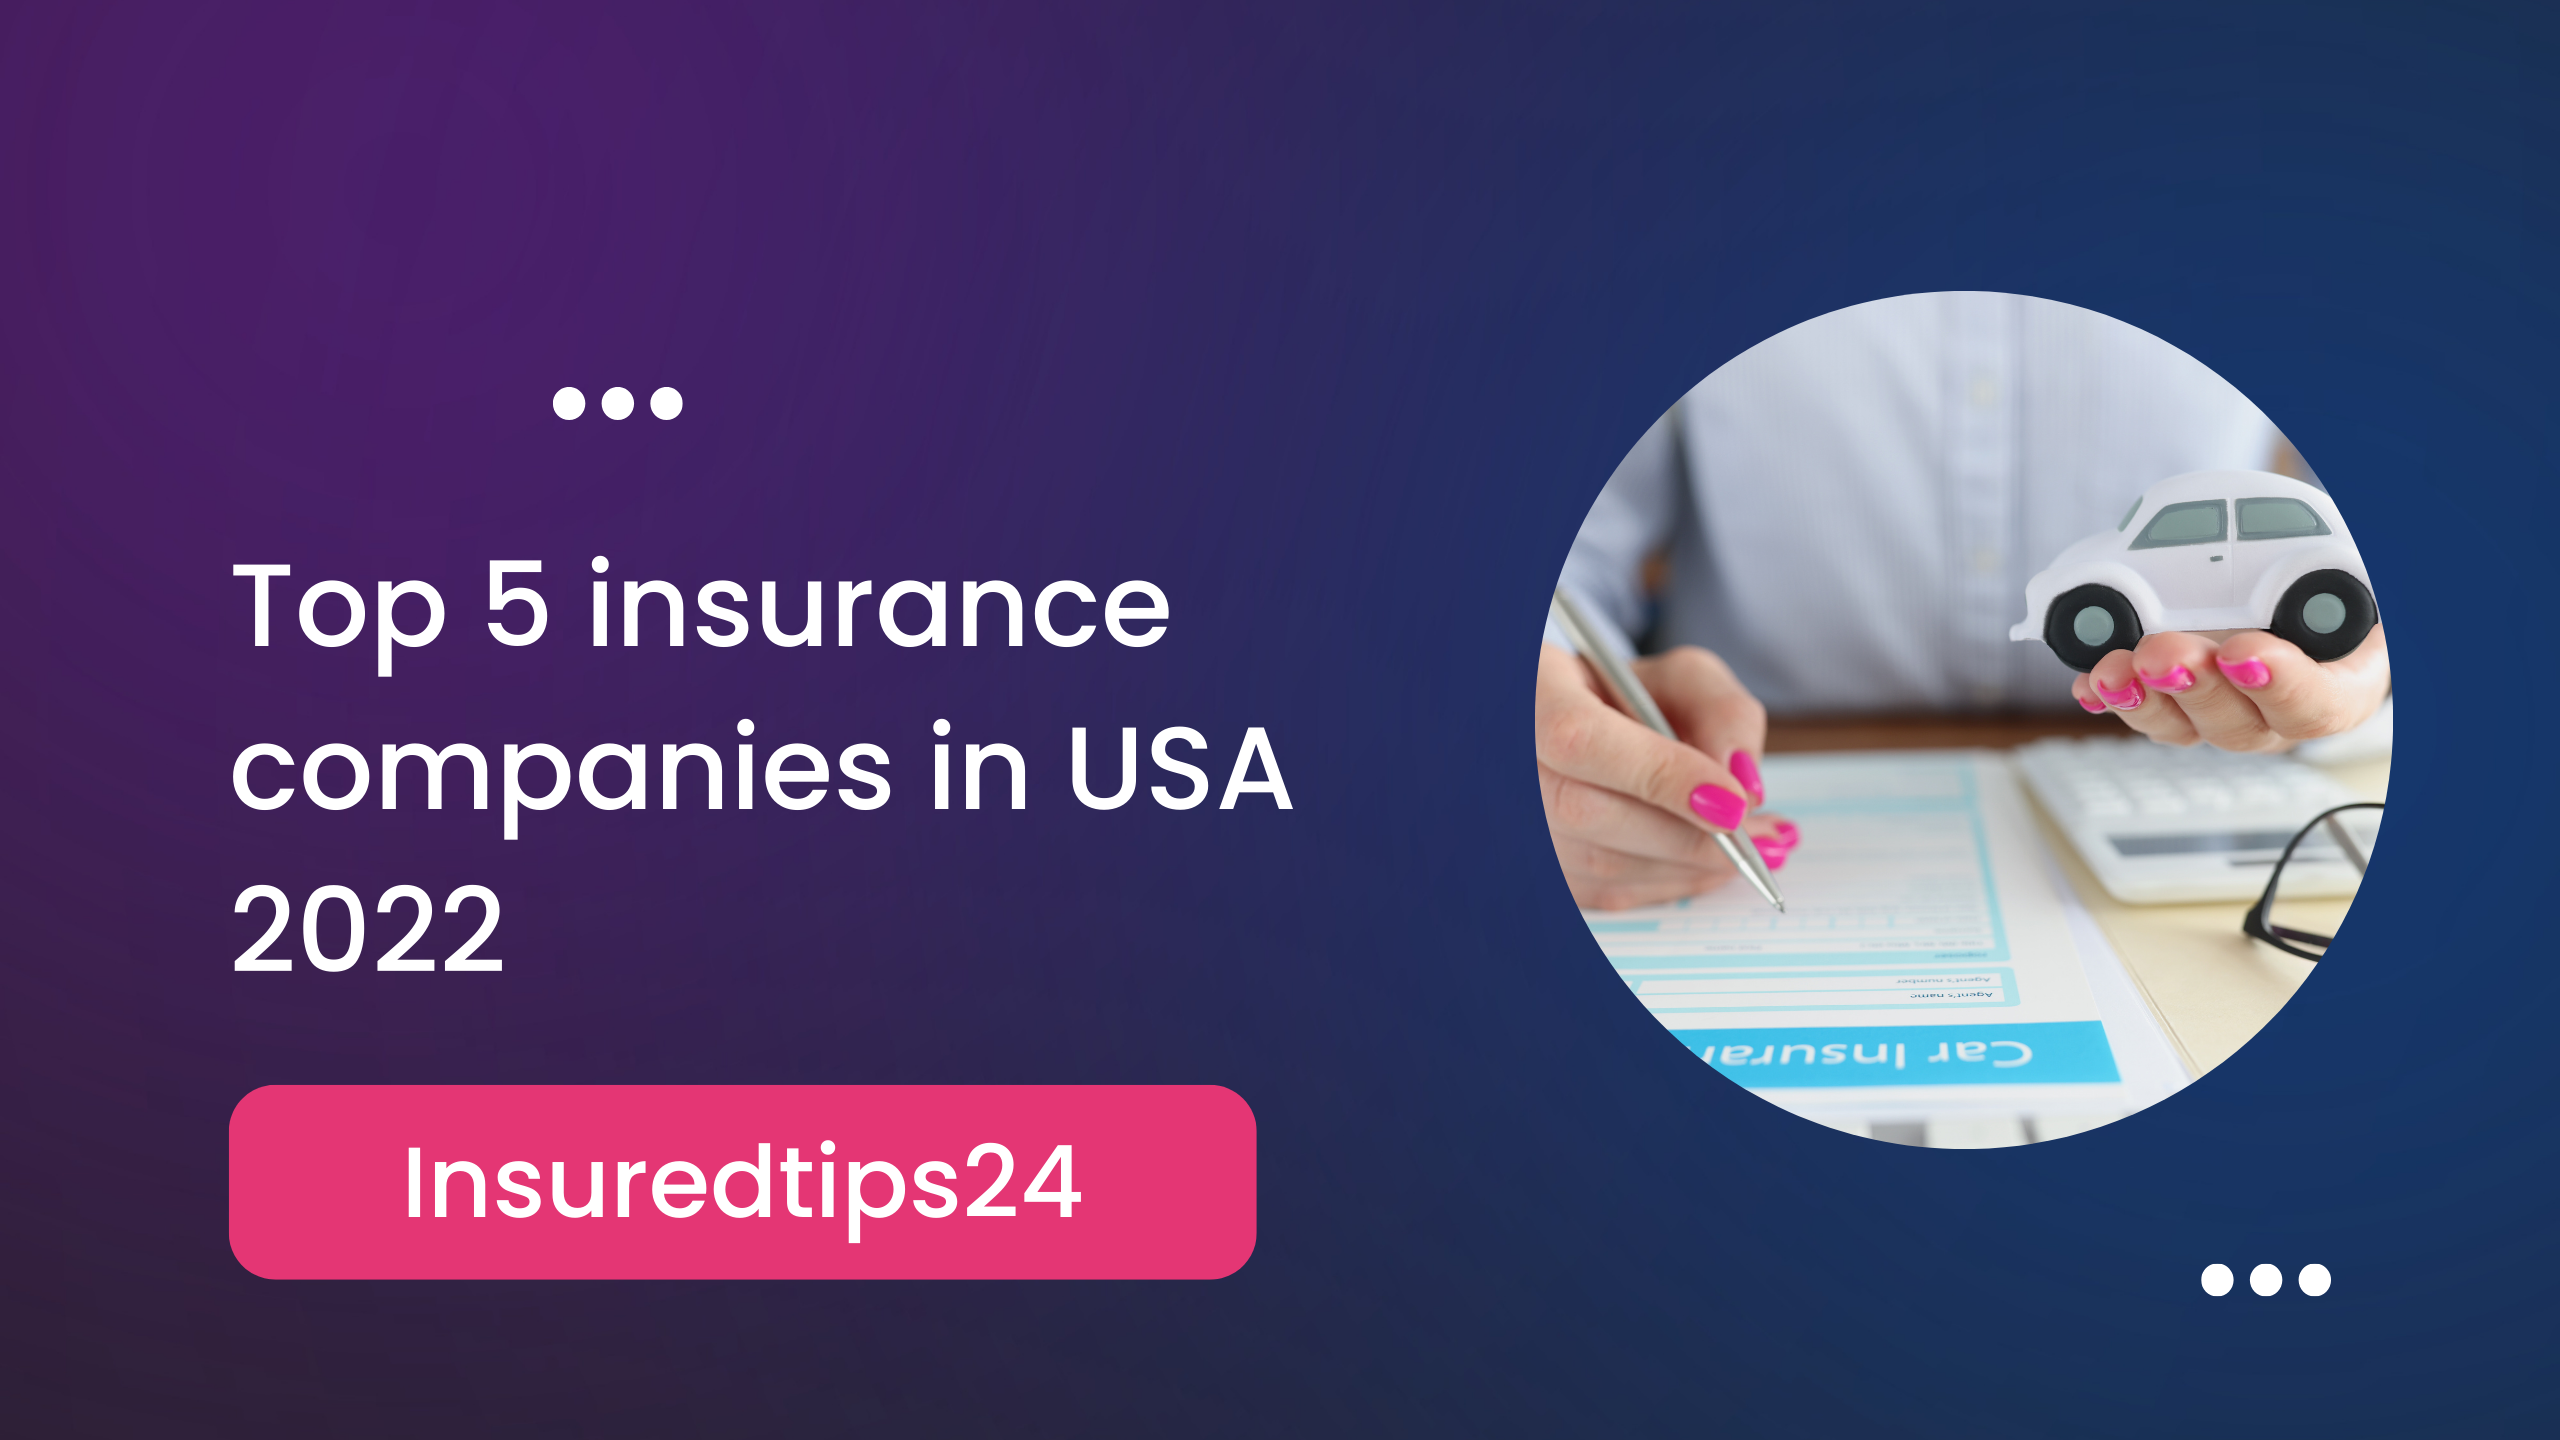 TOP 5 insurance companies in USA 2022